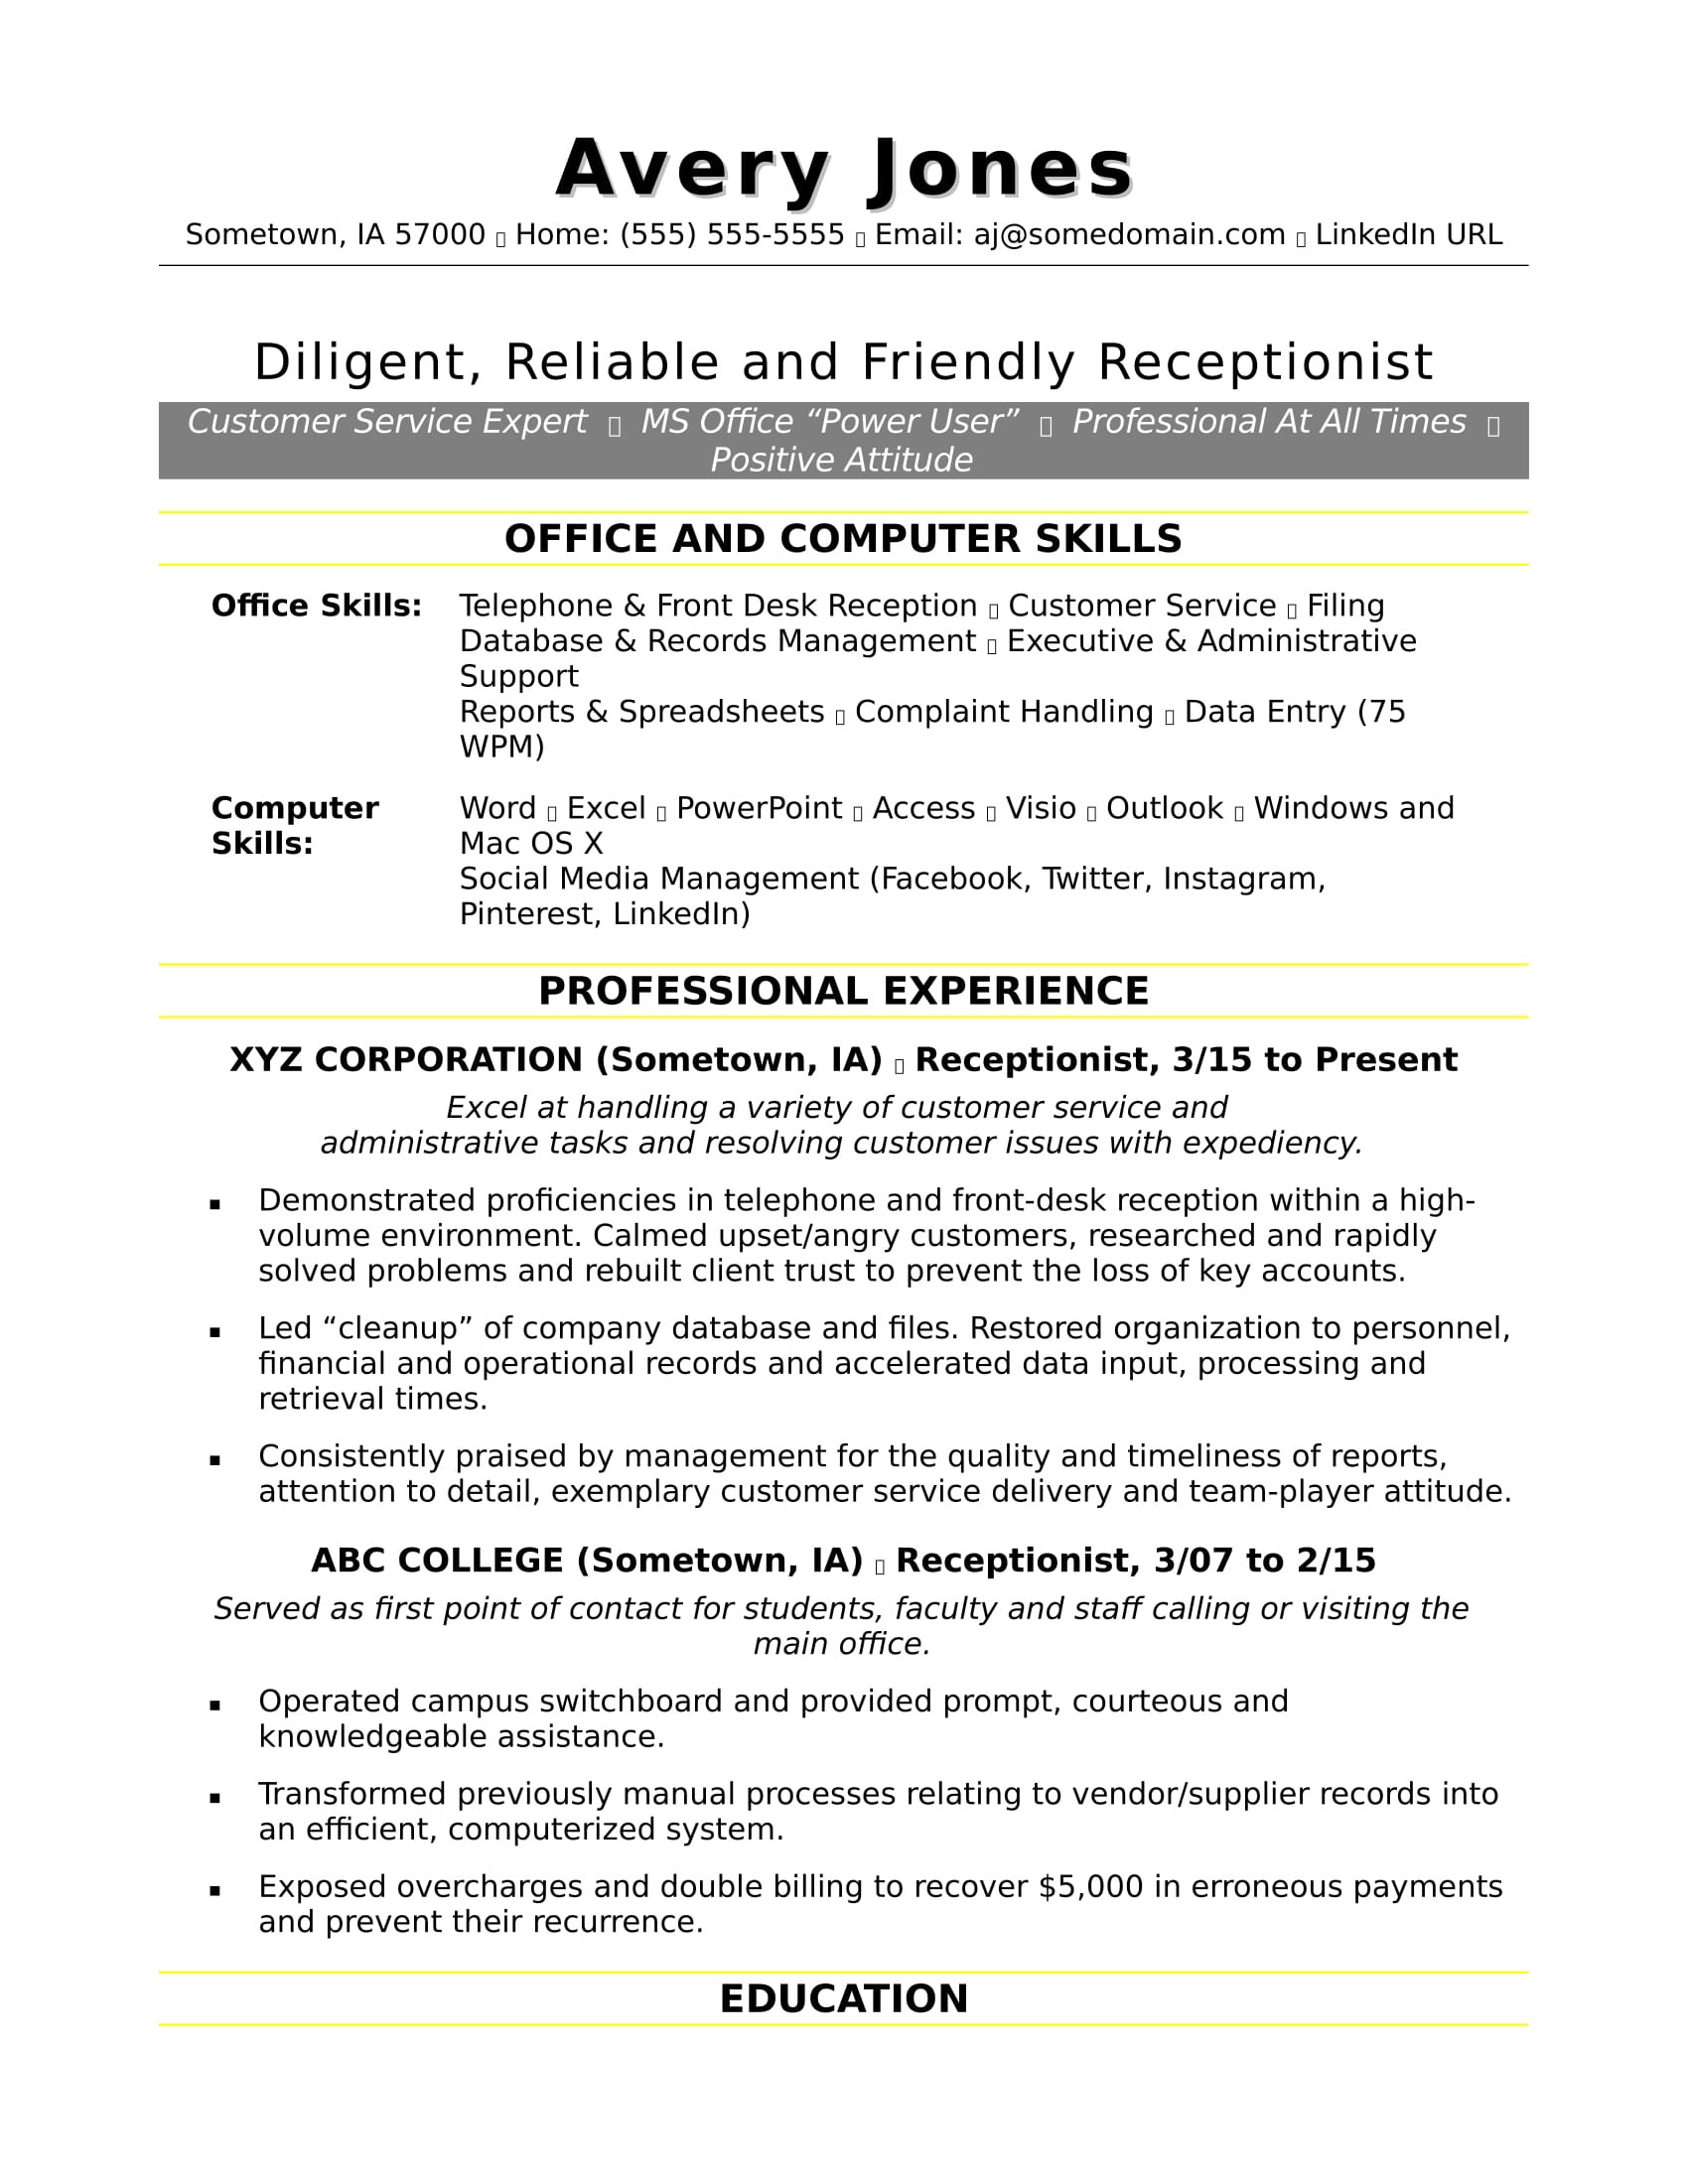 Sample Resume for Front Desk Customer Support Admin Receptionist Resume Monster.com